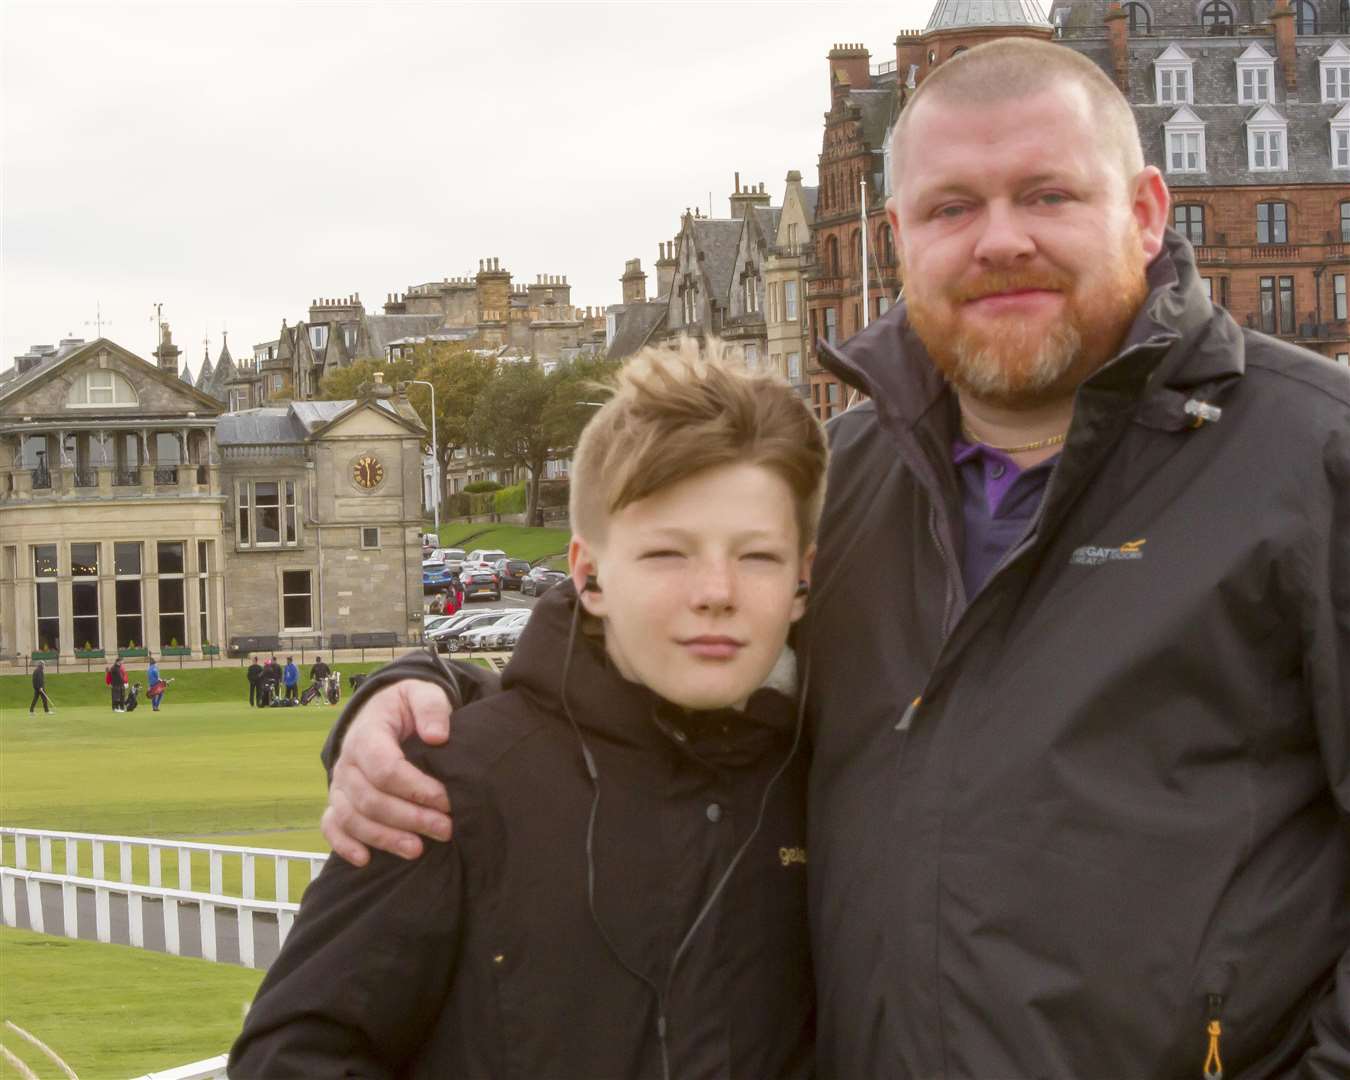 Daniel Burgess and Patrick Burgess on their trip to St Andrews, Scotland